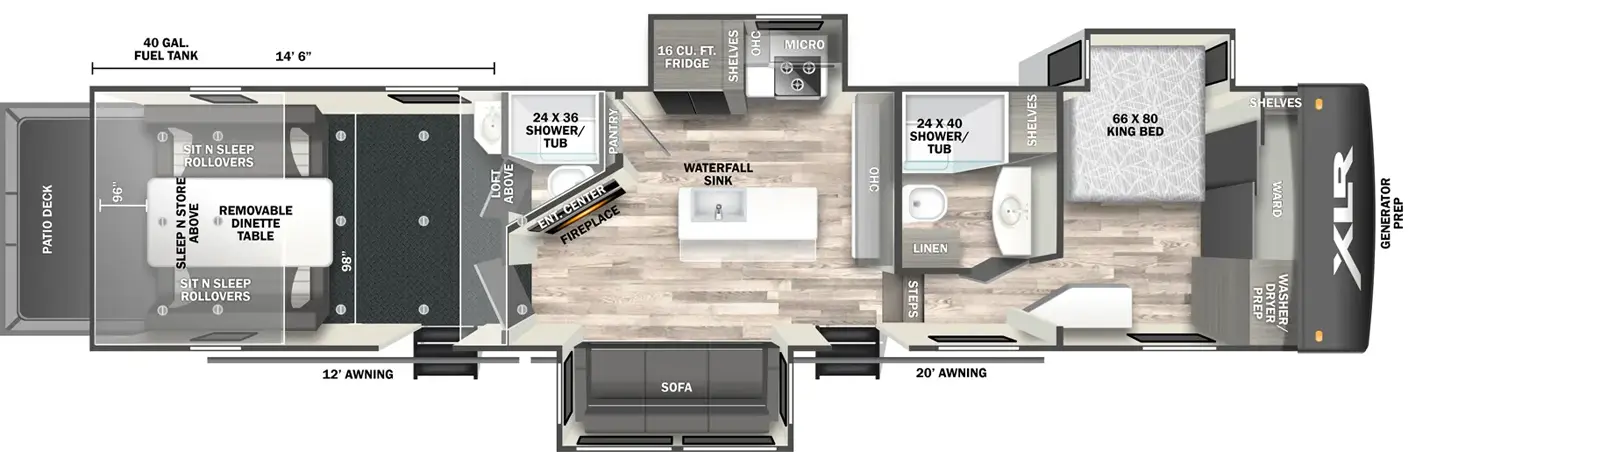 39G15 Floorplan Image